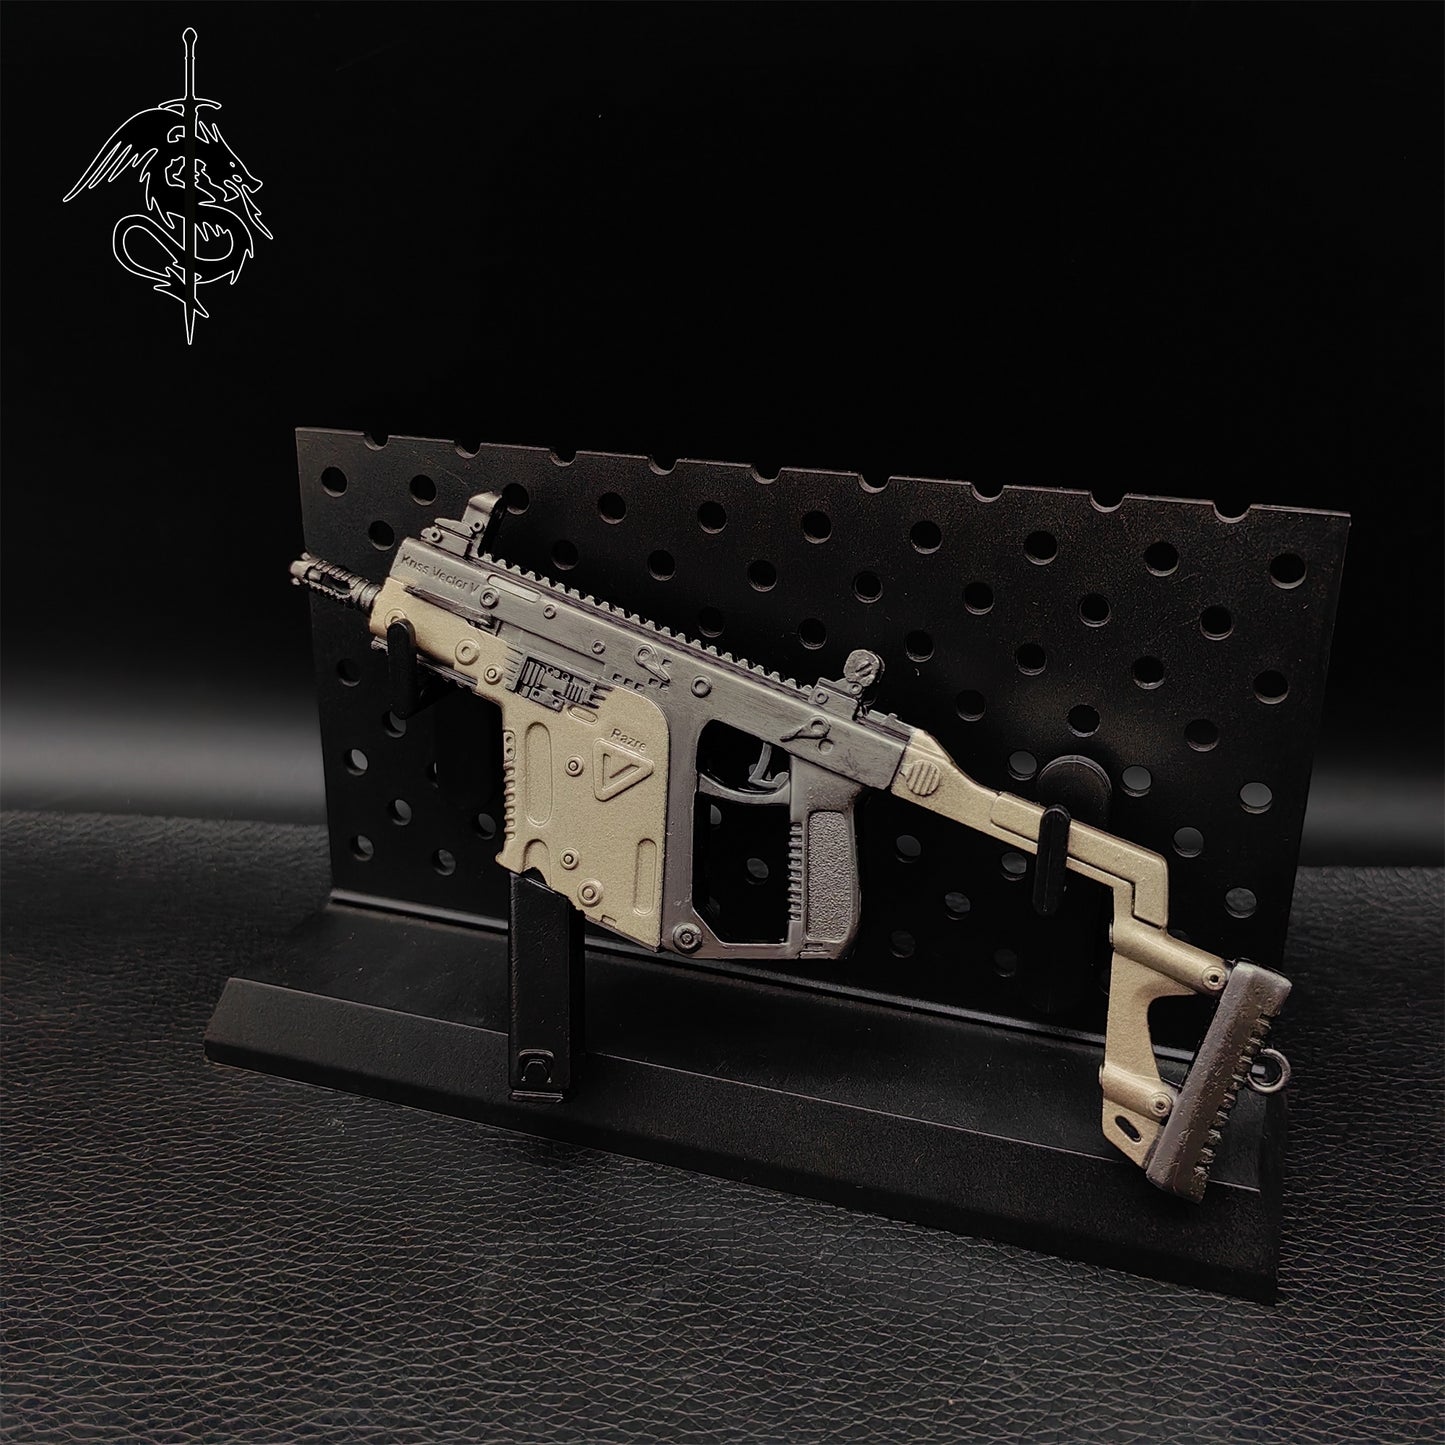 Metal KRISS Vector Miniature Tiny Alloy Vector SMG Submachine Gun